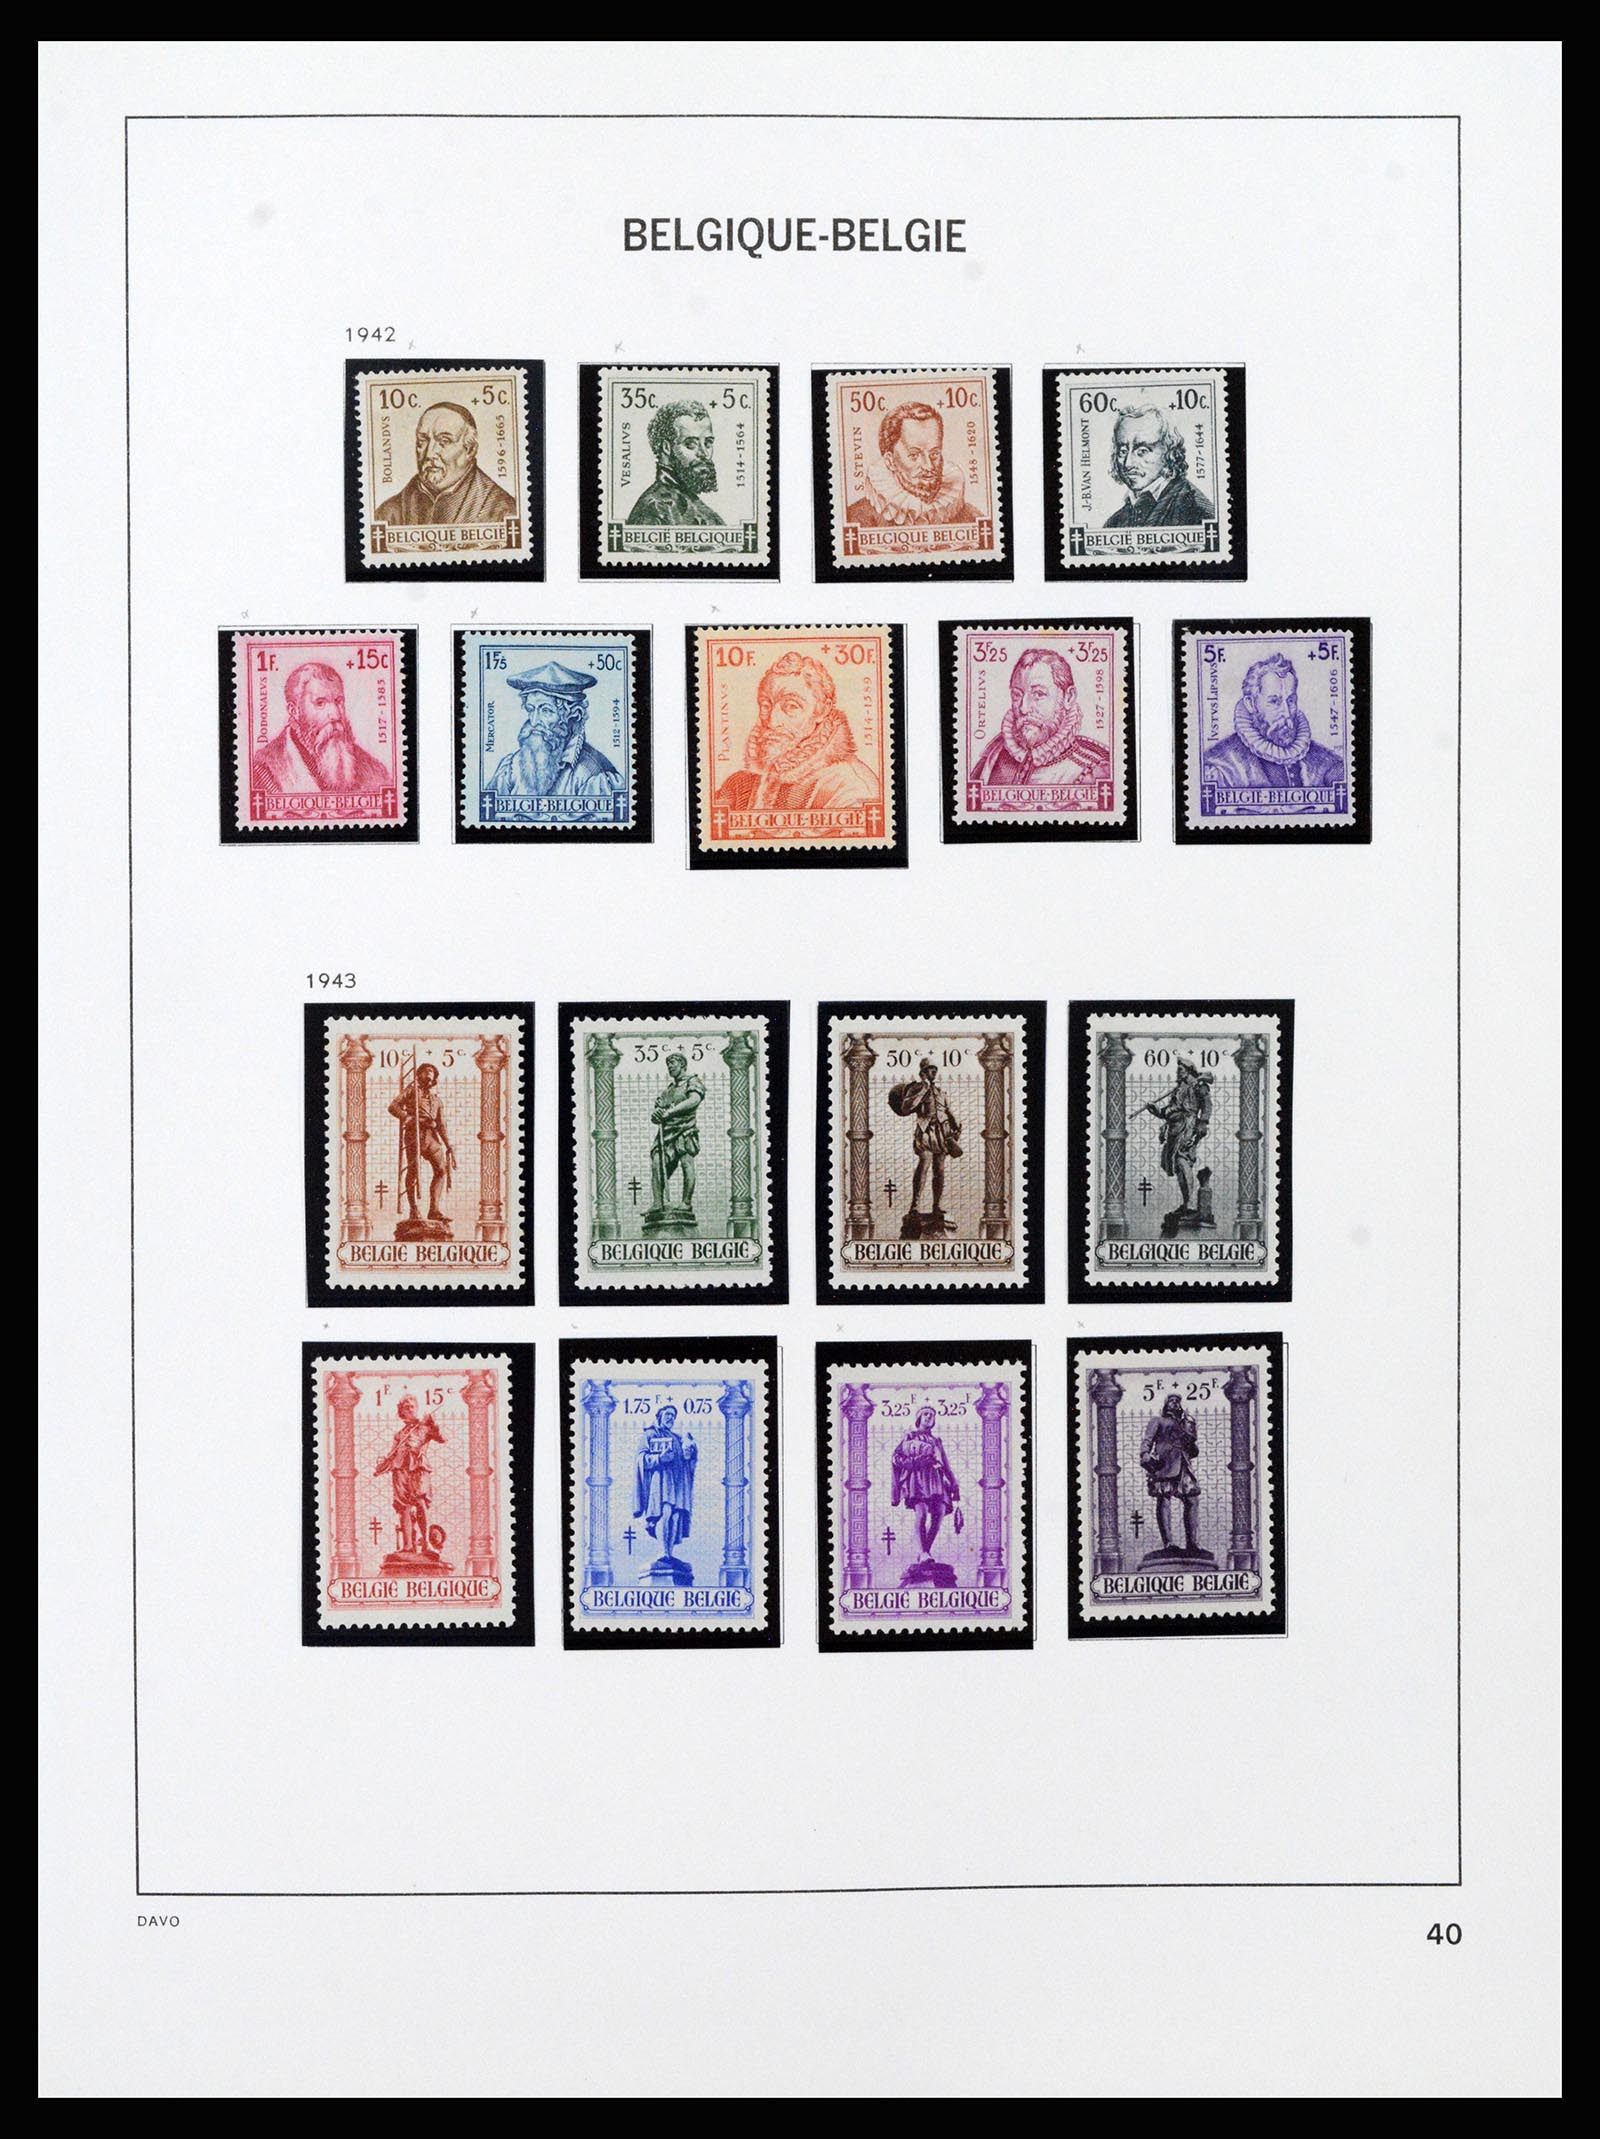 37189 041 - Stamp collection 37189 Belgium 1849-2006.